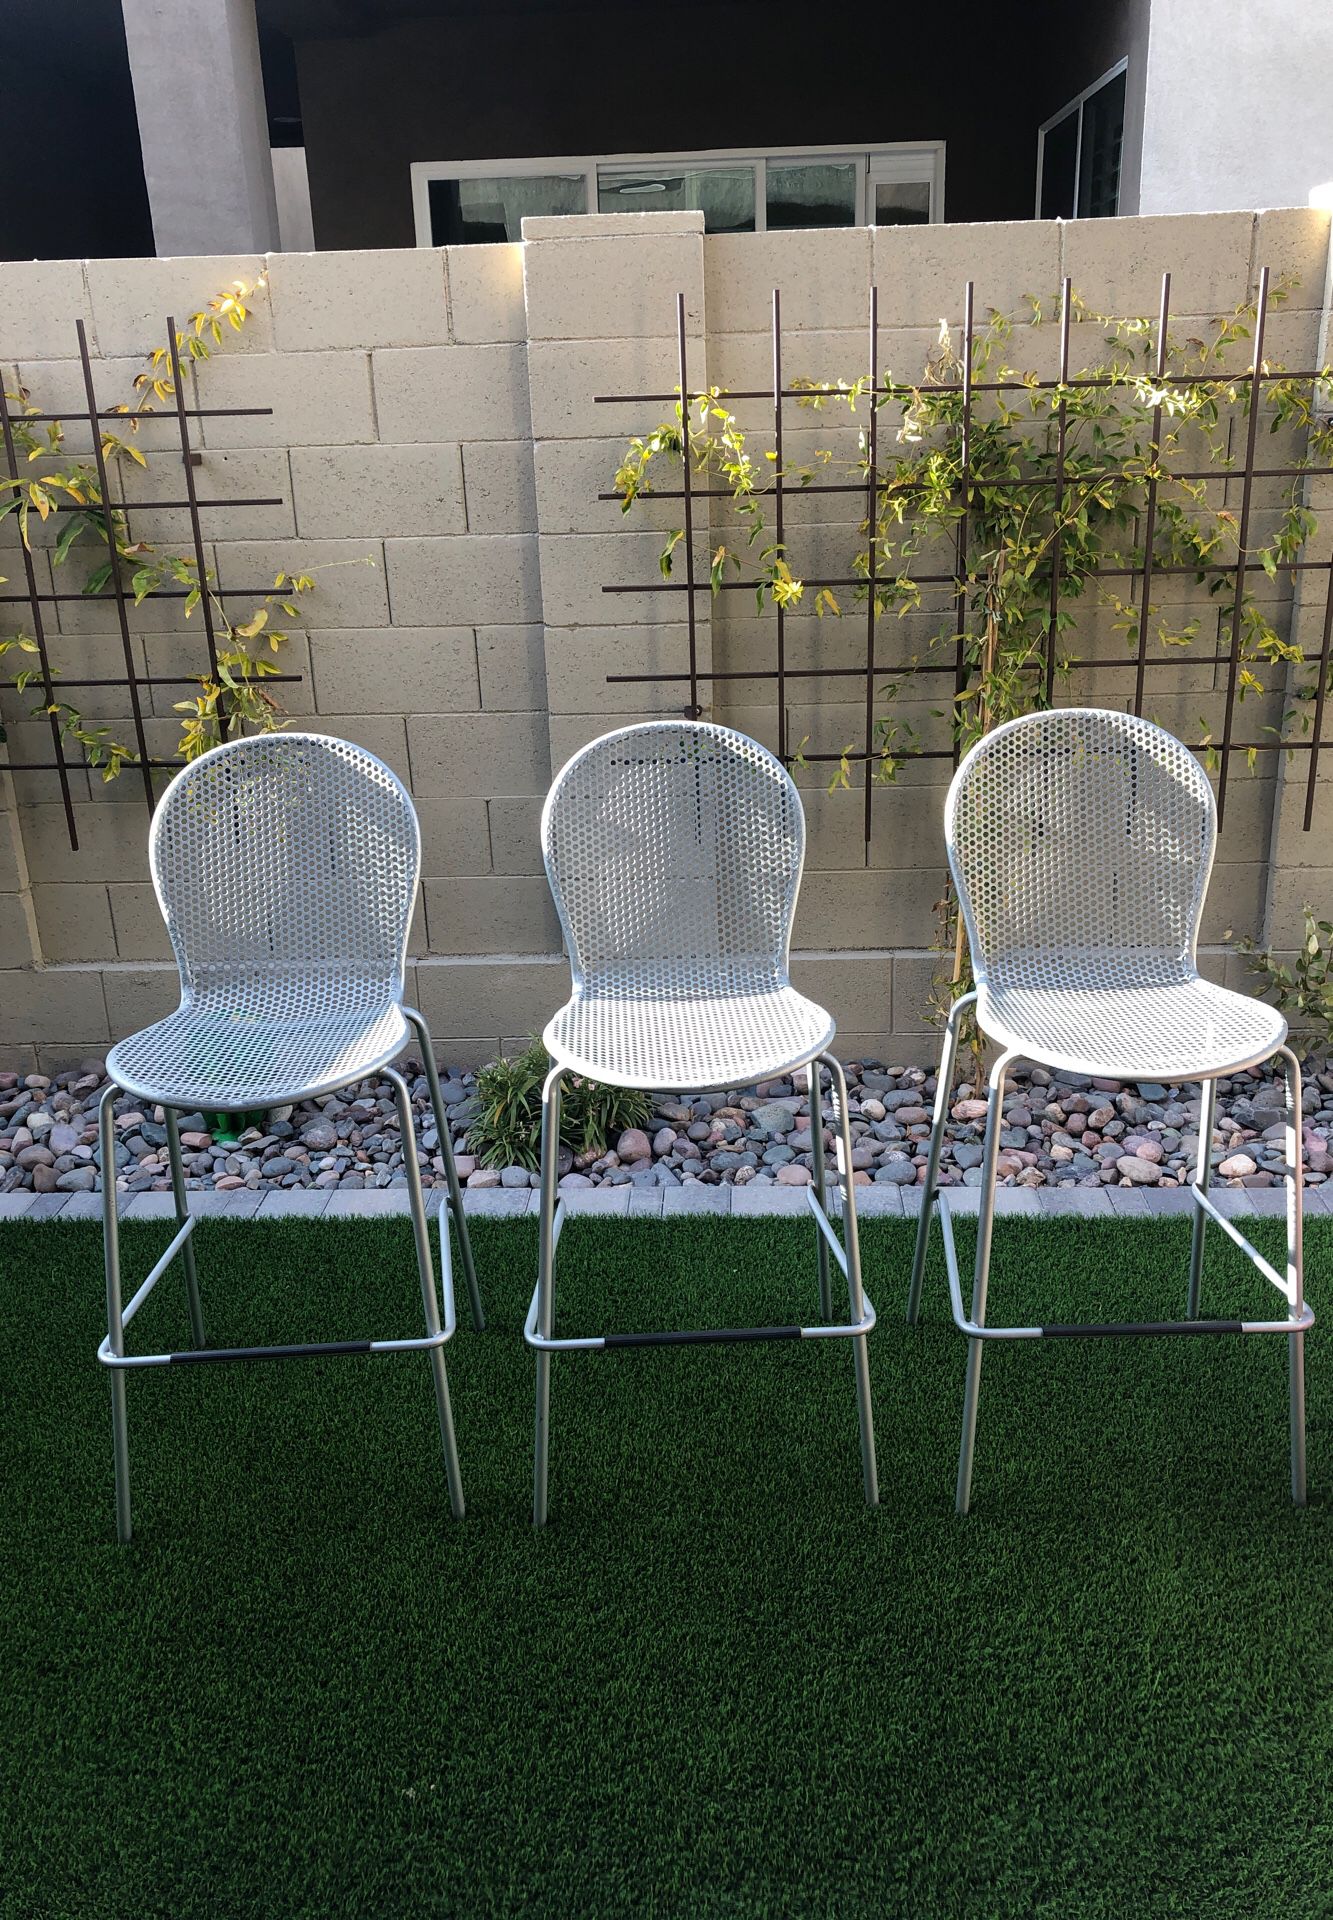 3 Outdoor Smith & Hawken Barstools - Patio Furniture